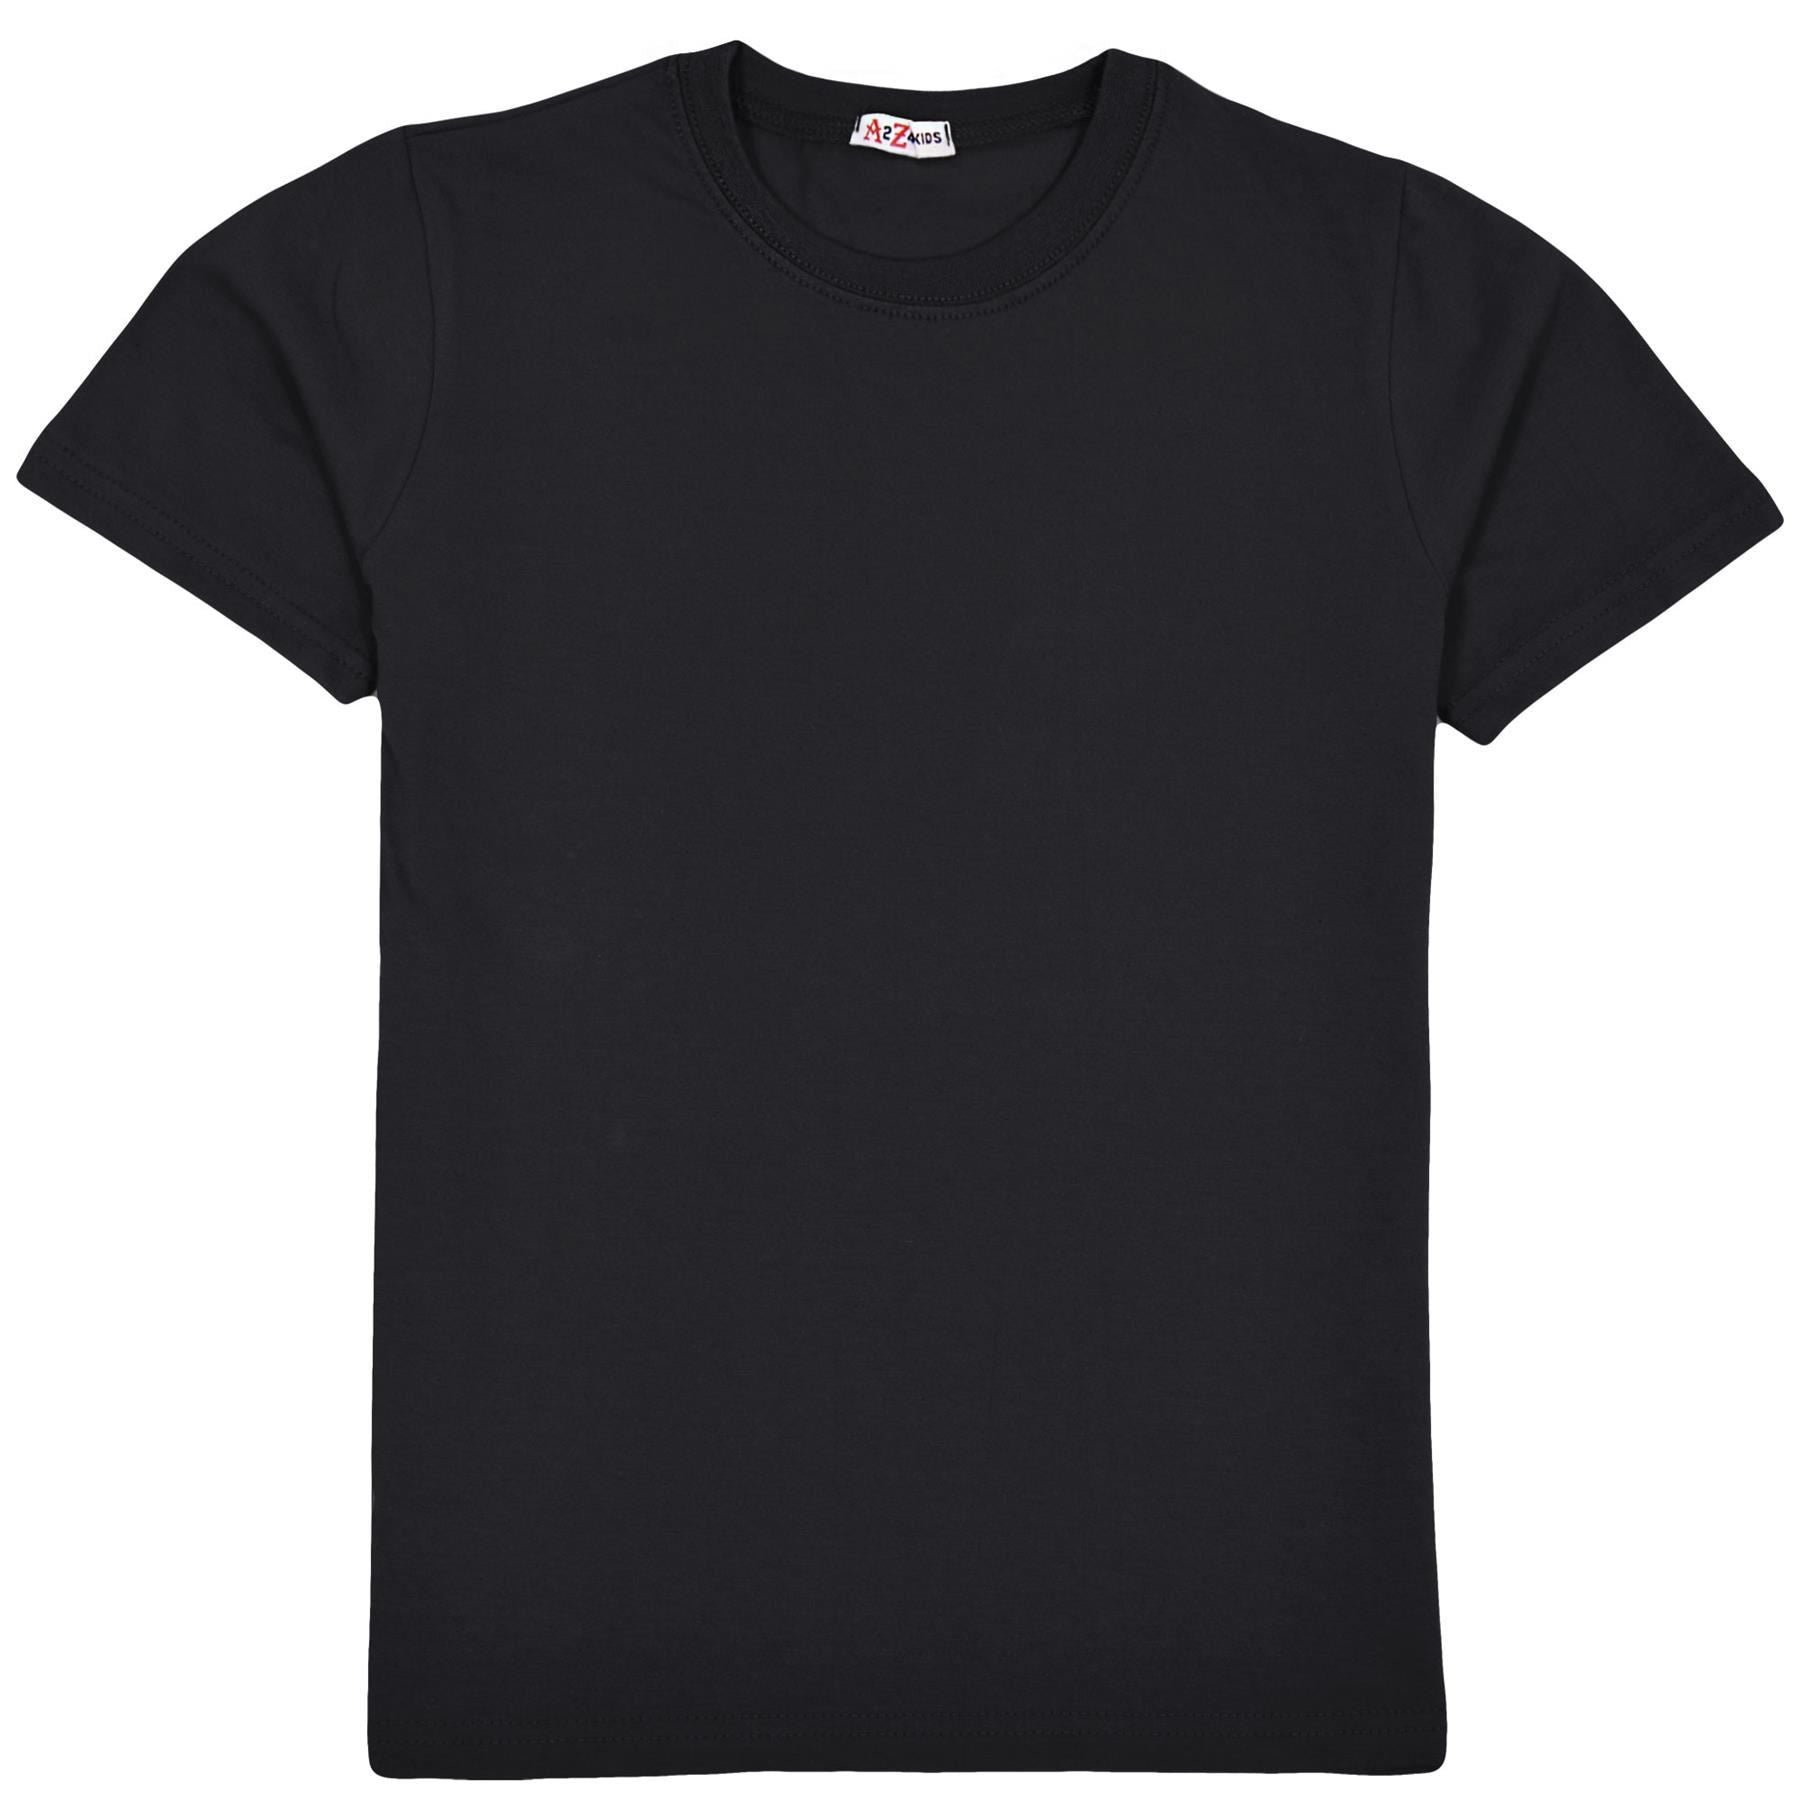 Boys Plain Soft Feel Summer Black T Shirt Top